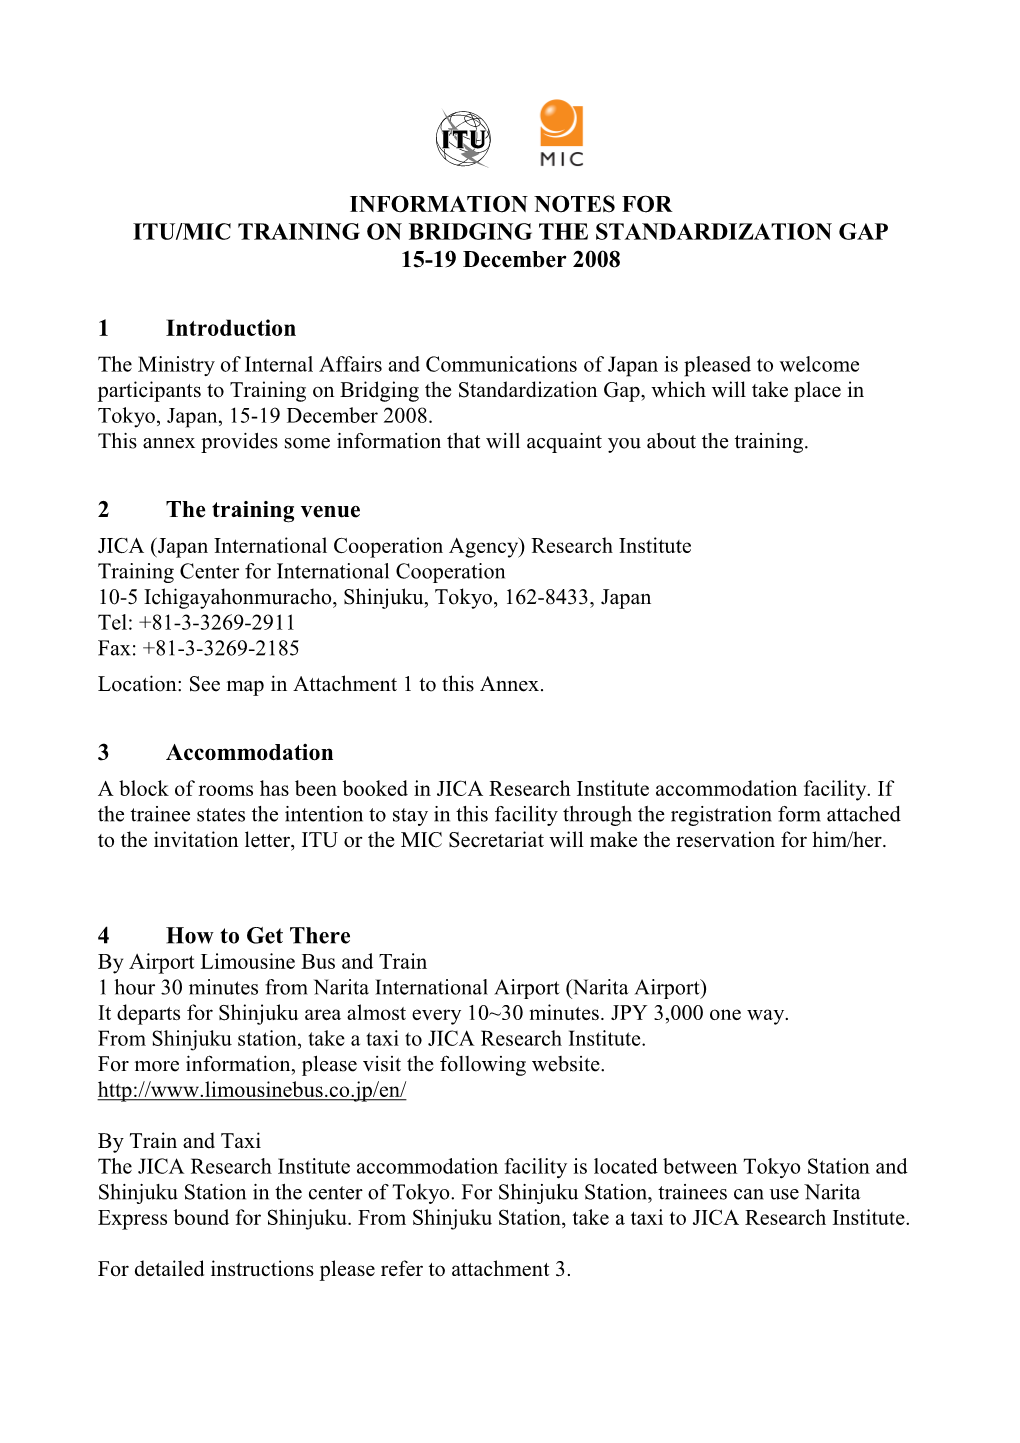 INFORMATION NOTES for ITU/MIC TRAINING on BRIDGING the STANDARDIZATION GAP 15-19 December 2008